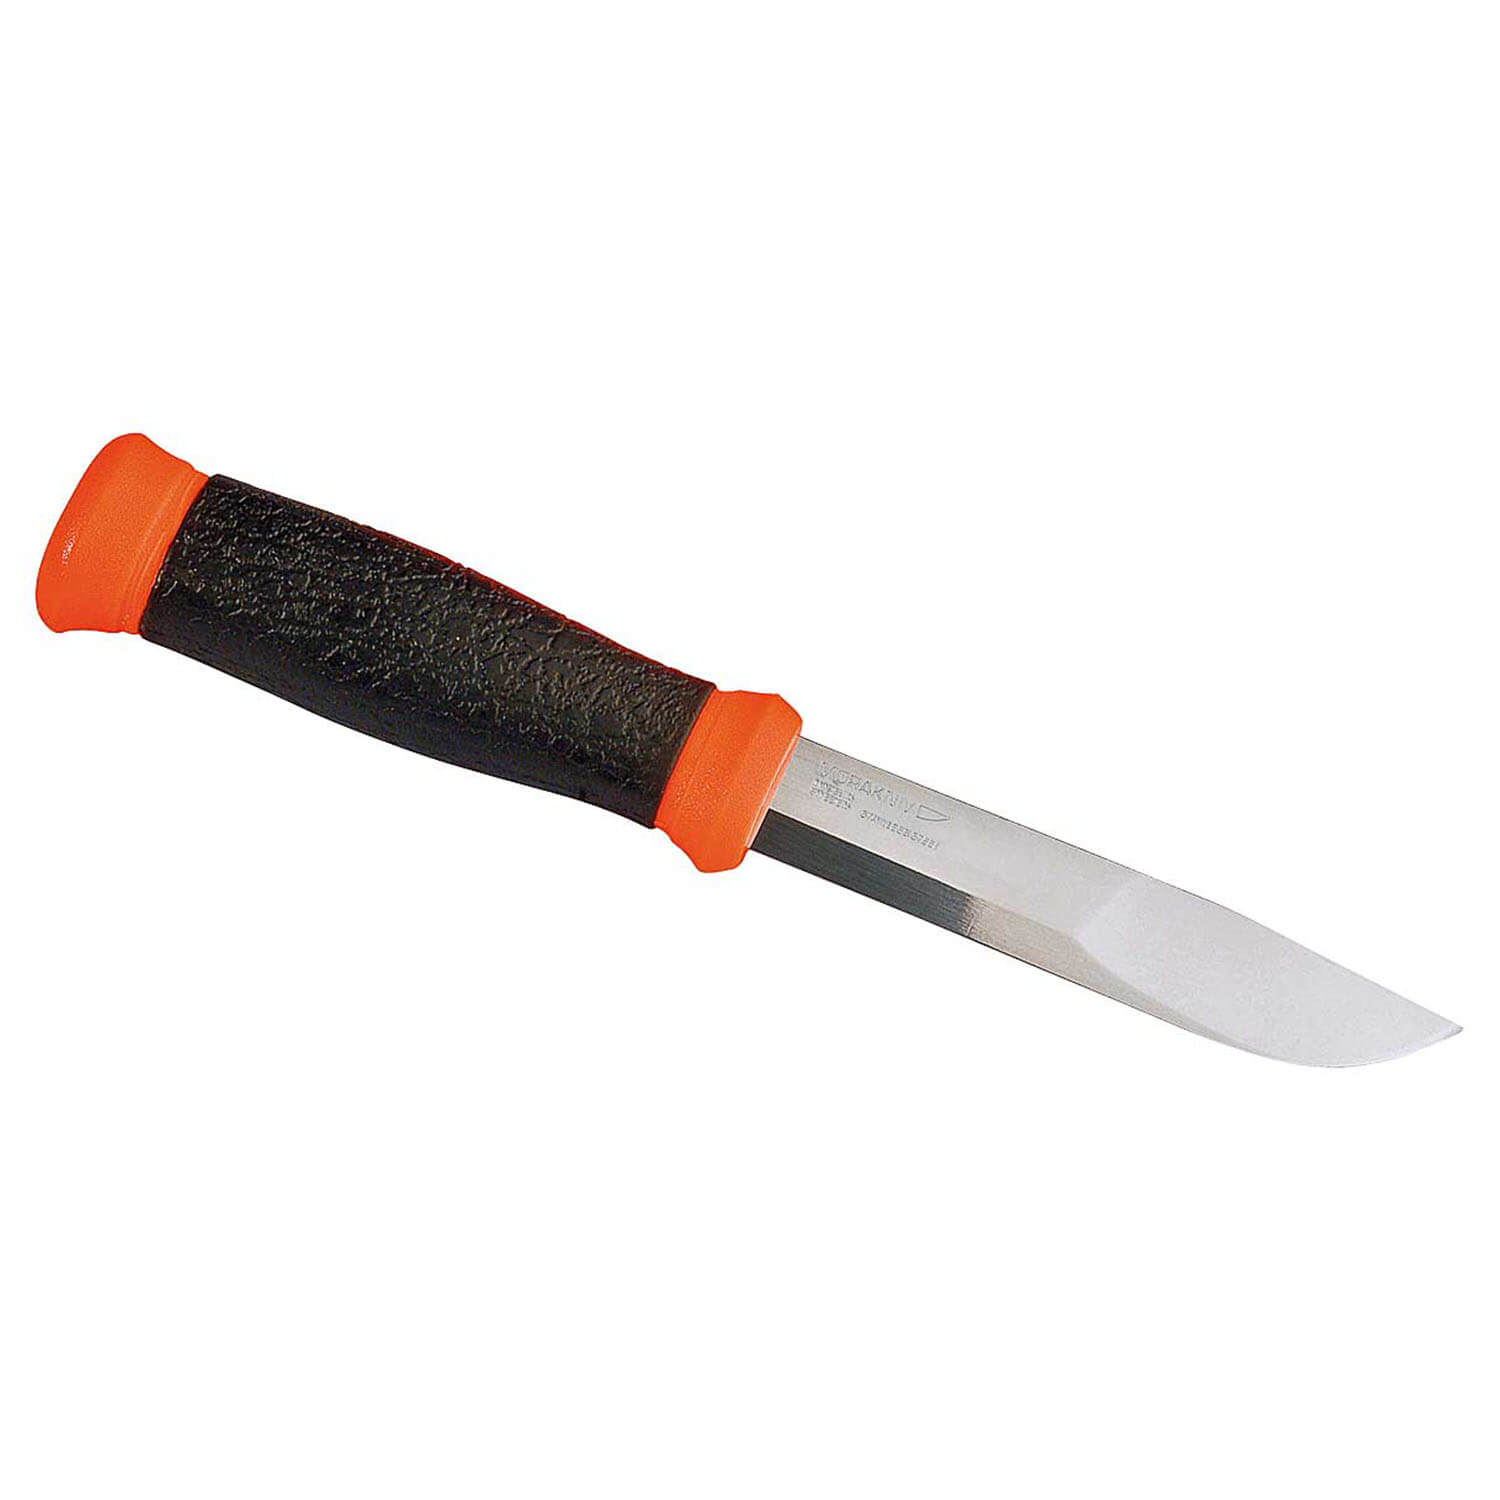 Mora Outdoor 2000 Knife (orange)